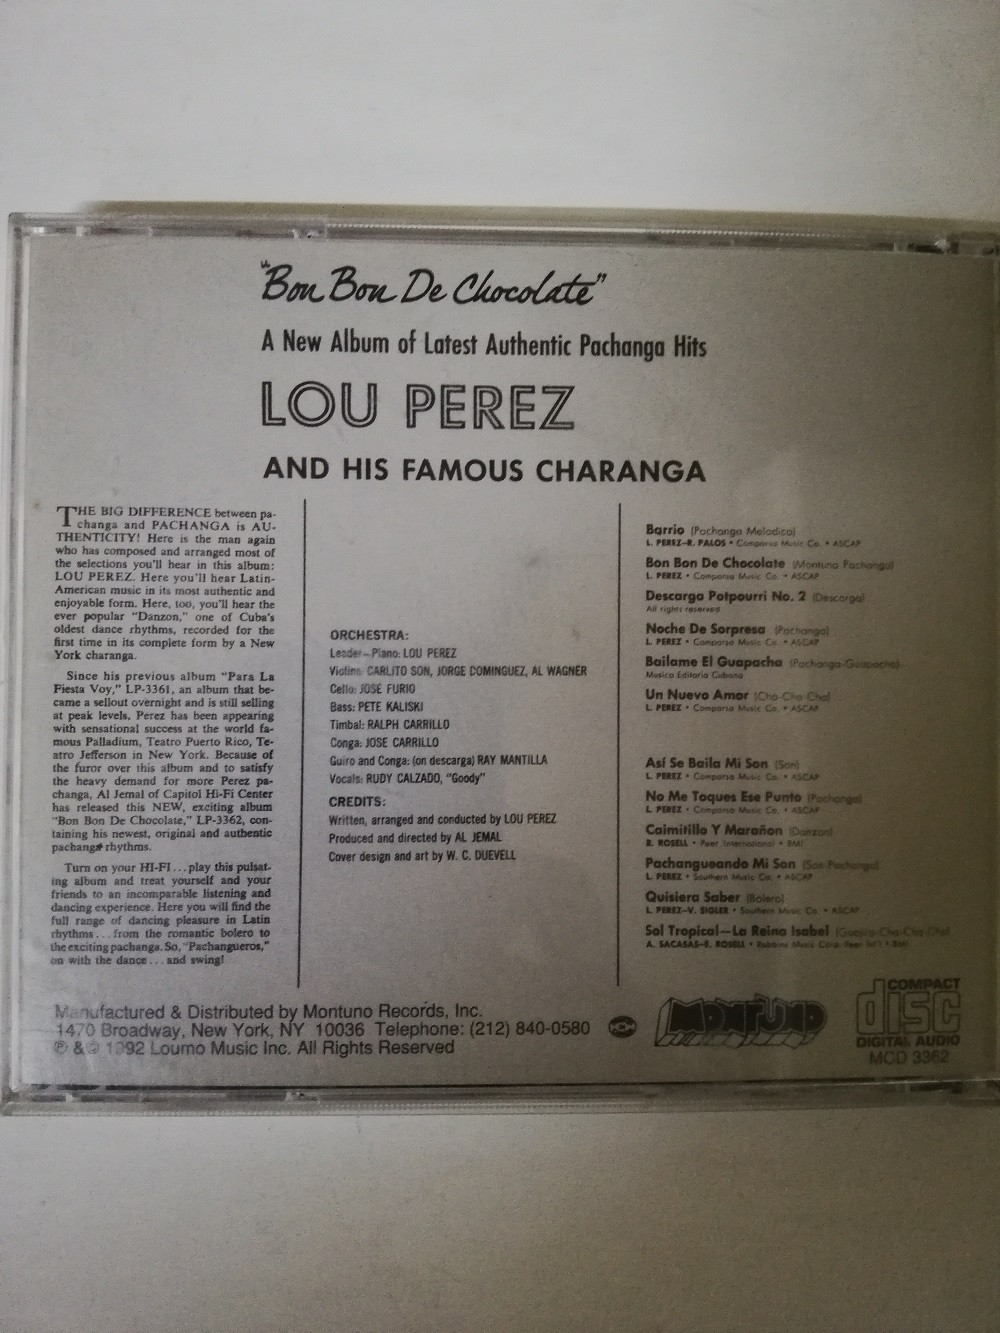 Imagen CD LOU PEREZ AND HIS CHARANGA ORCHESTRA - BON BON DE CHOCOLATE! 2